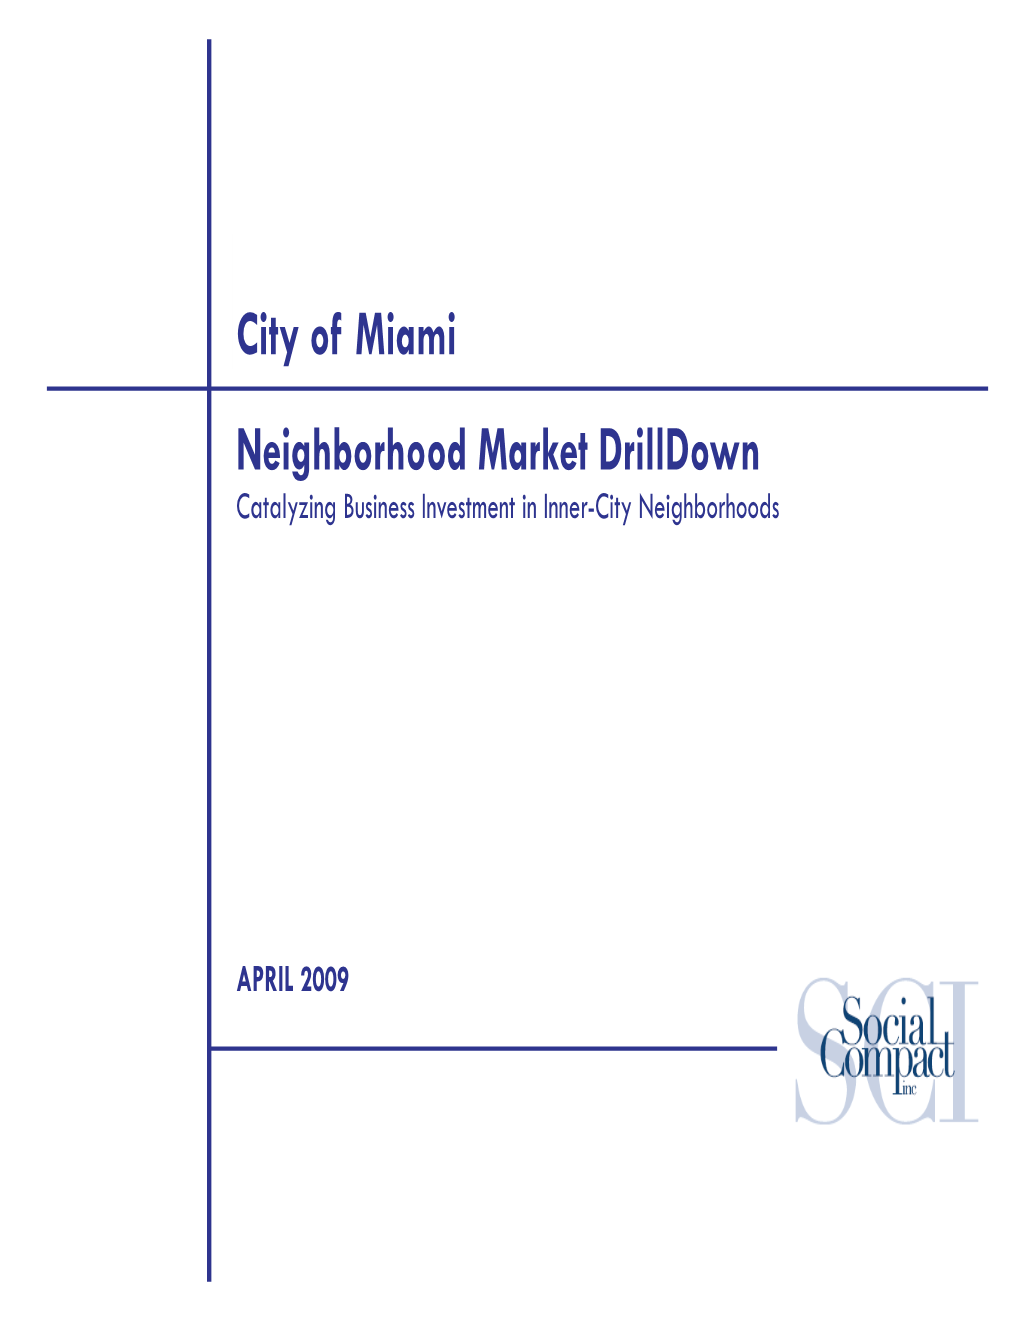 City of Miami Neighborhood Market Drilldown Catalyzing Business Investment in Inner-City Neighborhoods